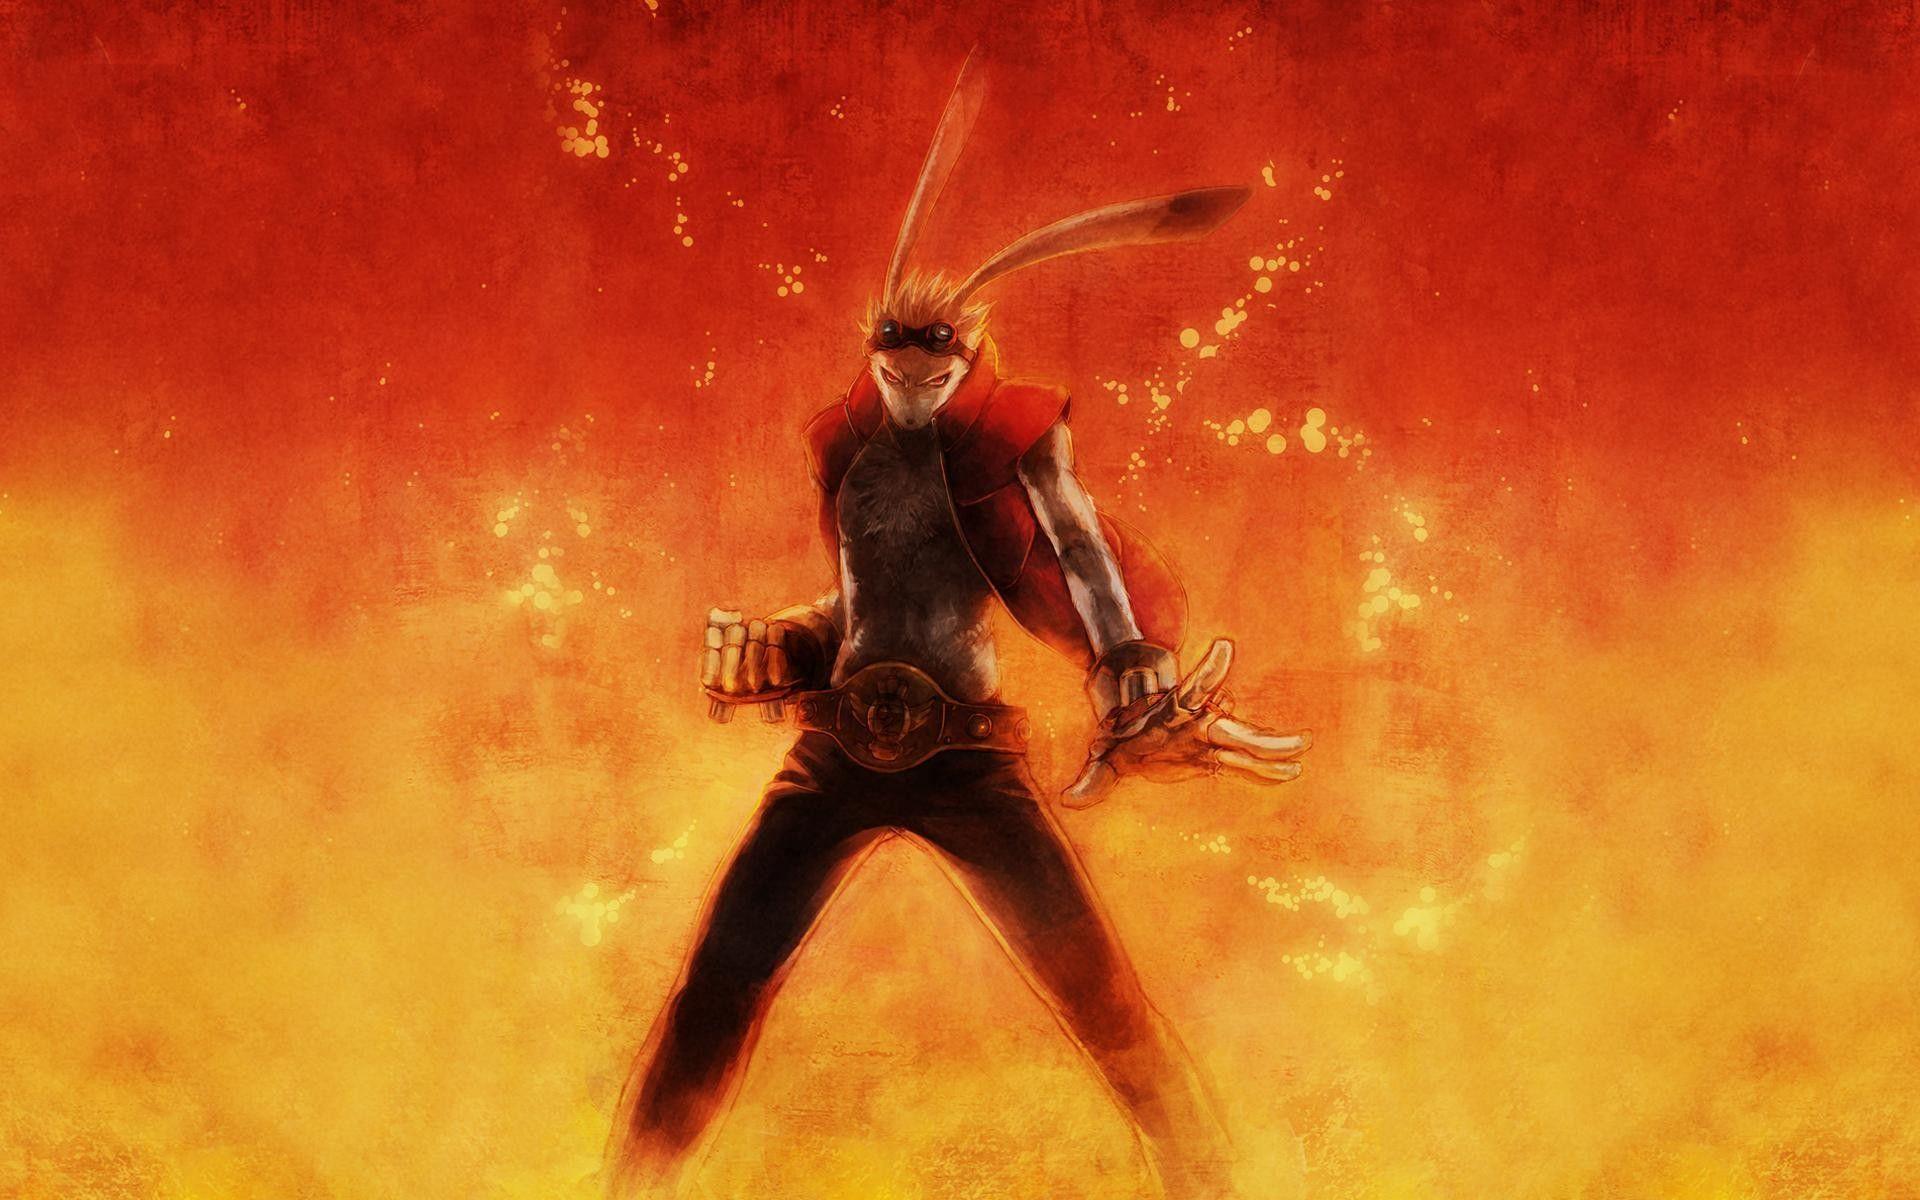 Download 3840x2160 Wallpaper Vegeta Dragon Ball Anime Fire 4 K Uhd  169 Widescreen 3840x2160 Hd Image Background 16718